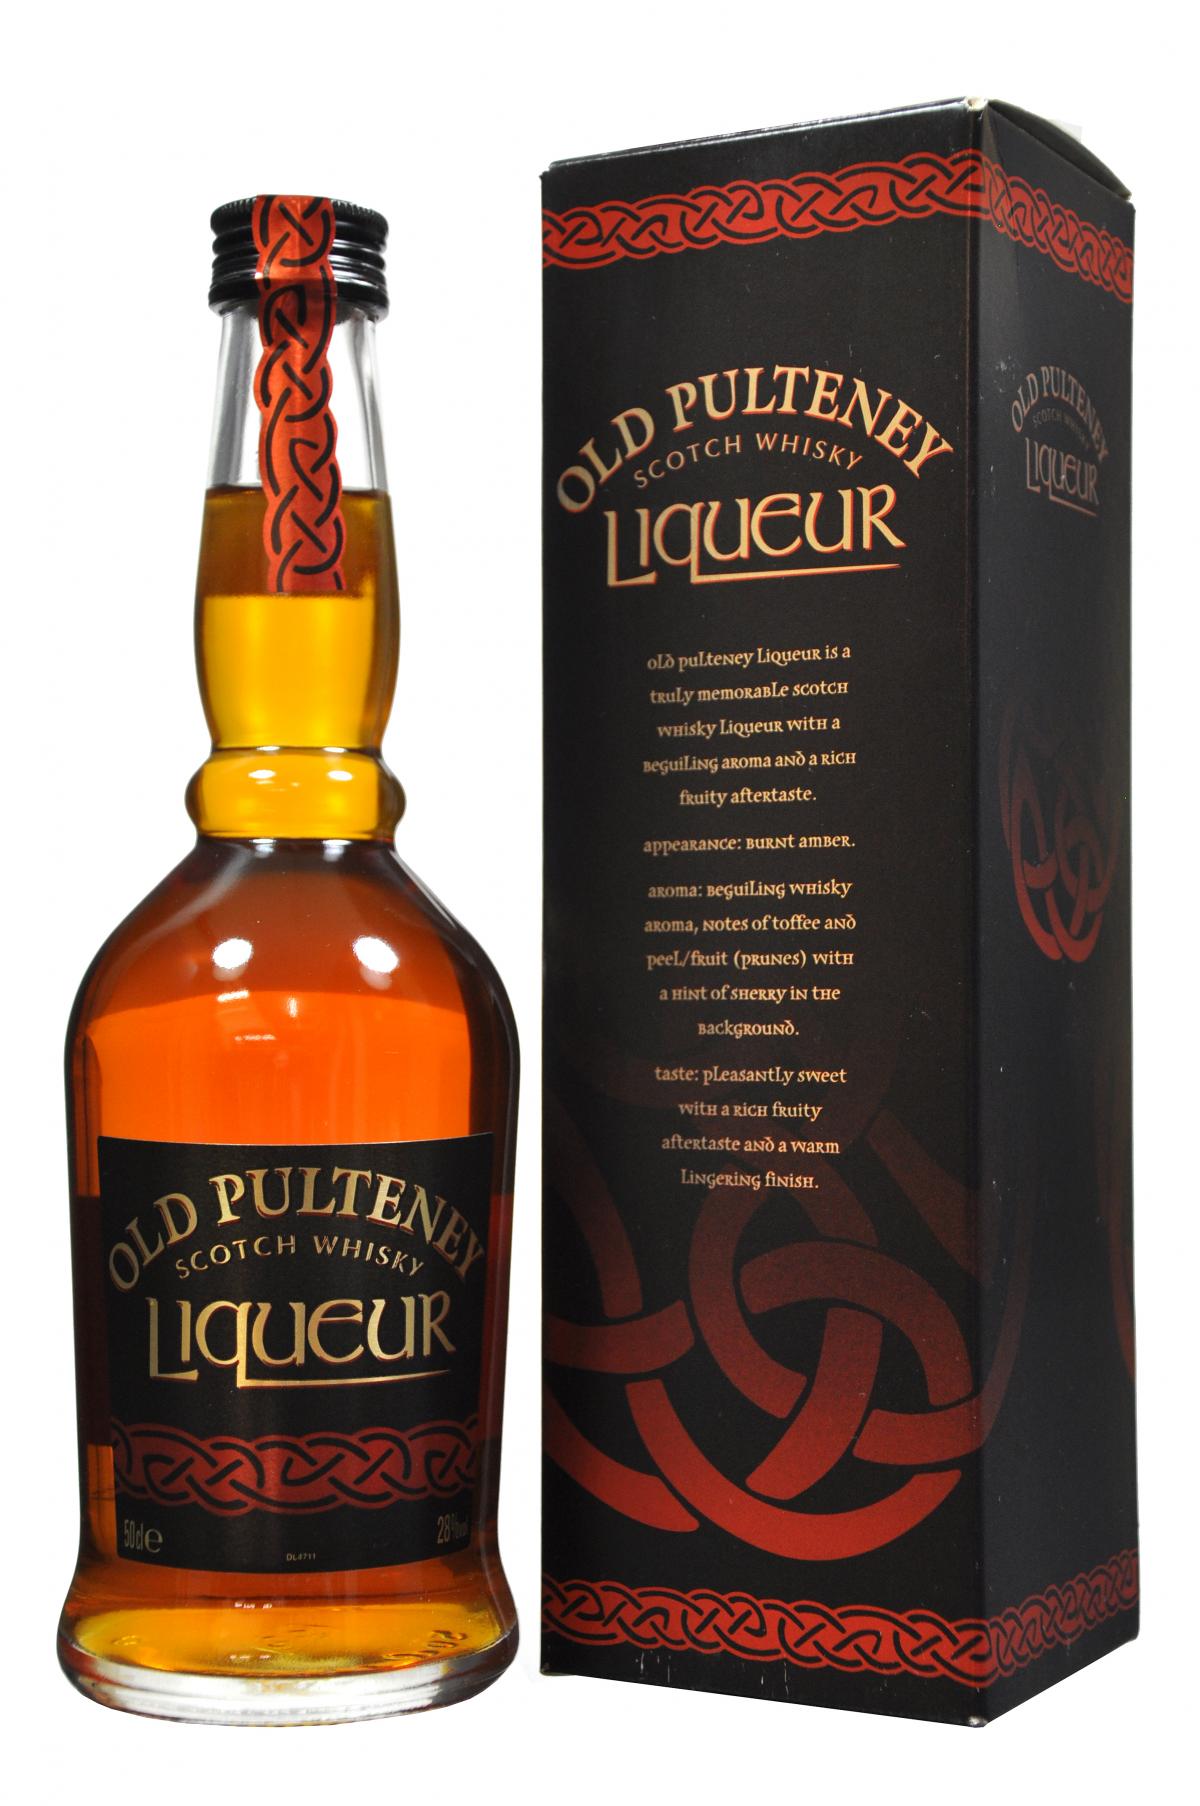 Old Pulteney Liqueur